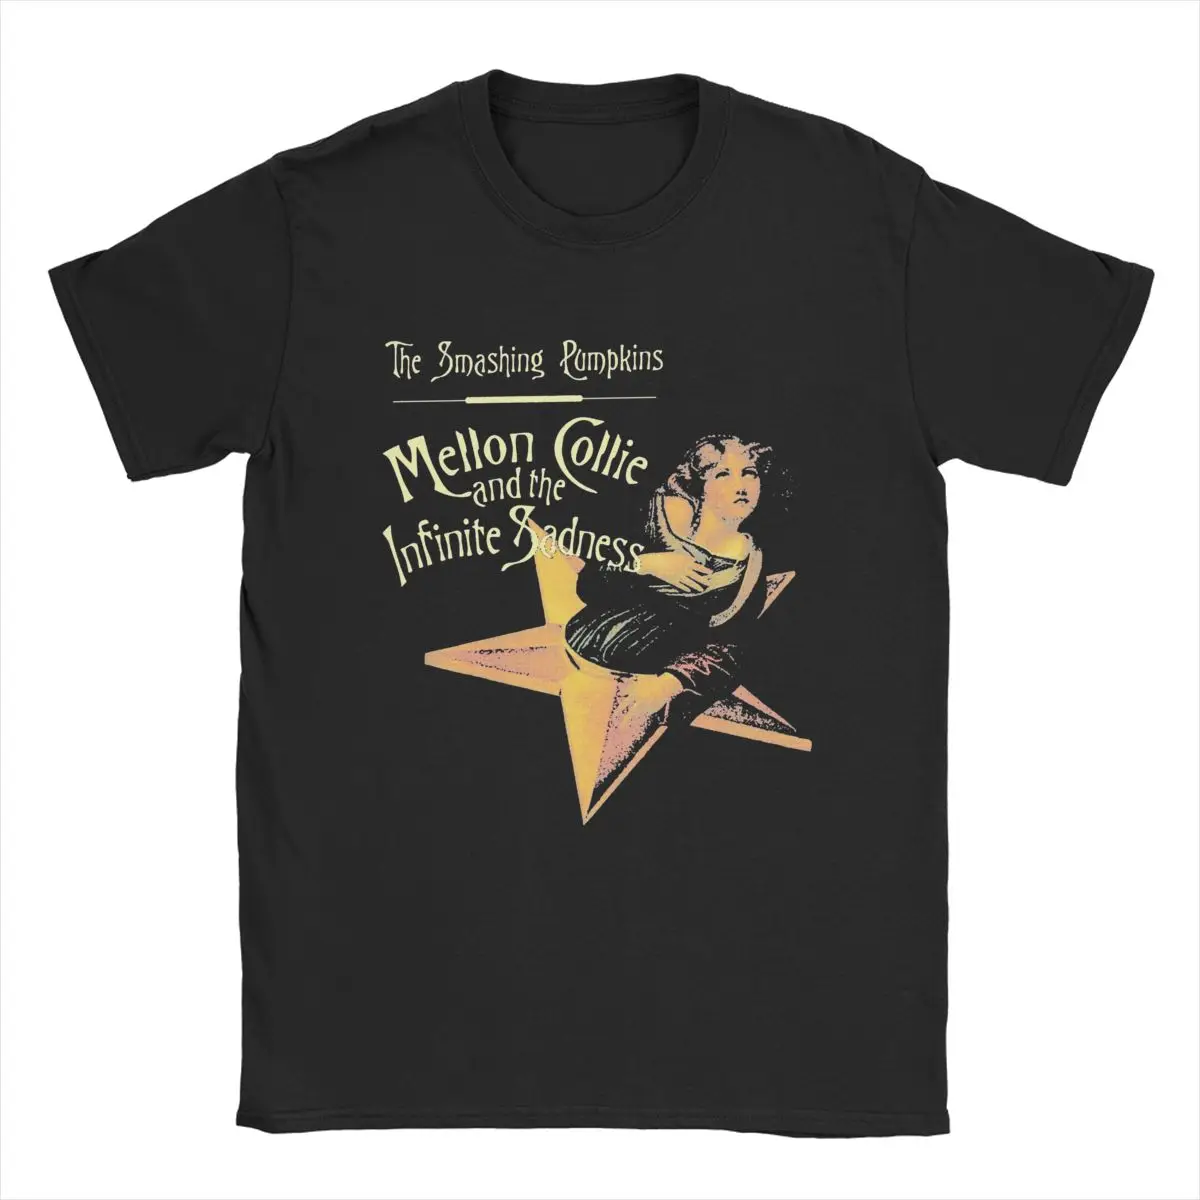 

Men's The Smashing Pumpkins T Shirt 100% Cotton Clothing Humorous Short Sleeve Crewneck Tee Shirt Gift Idea T-Shirt